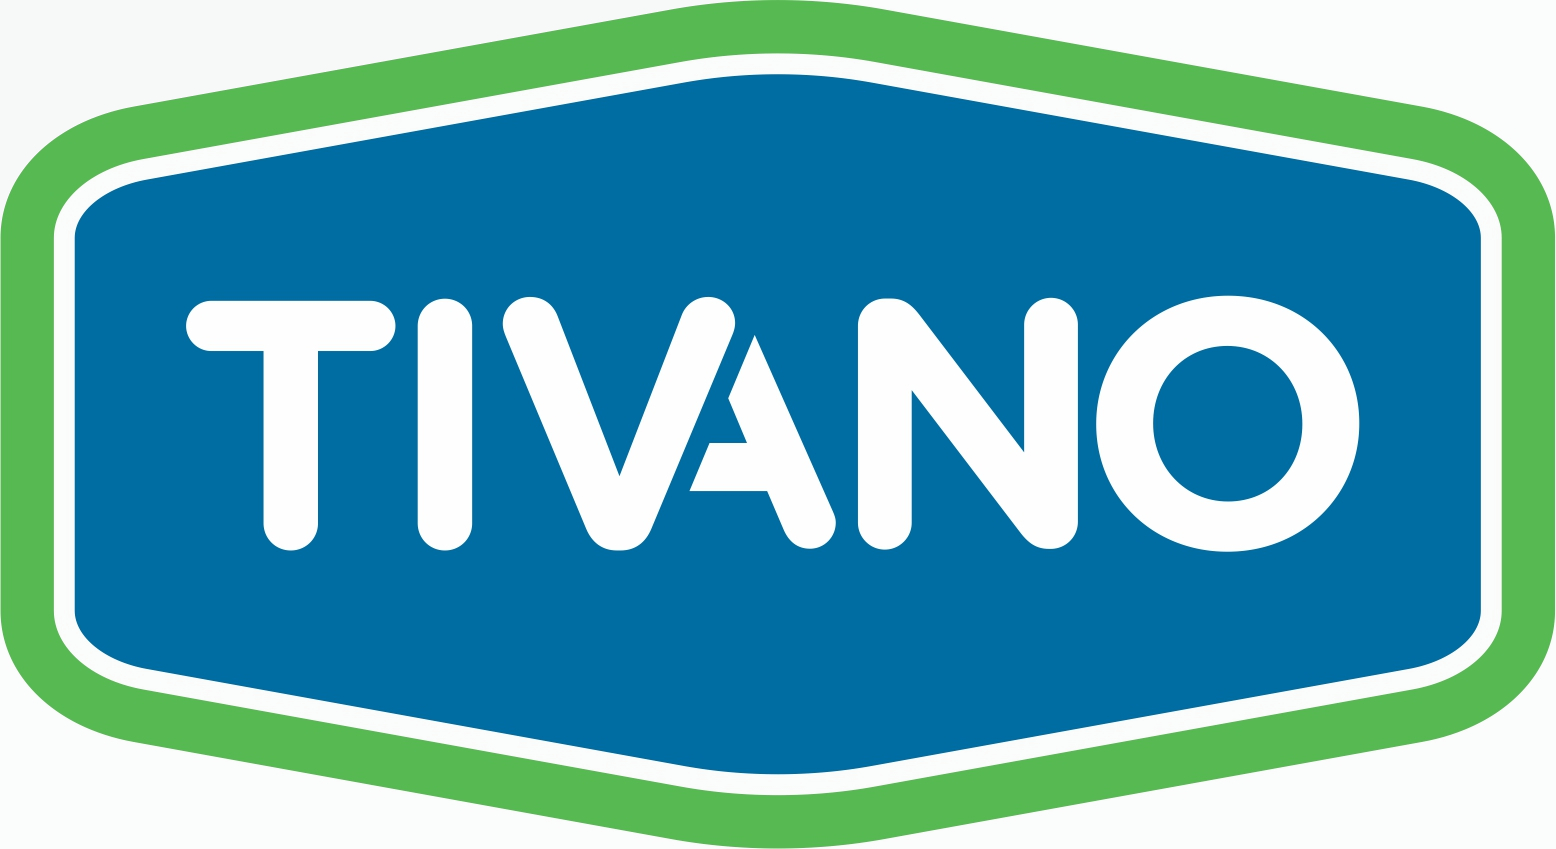 Tivano